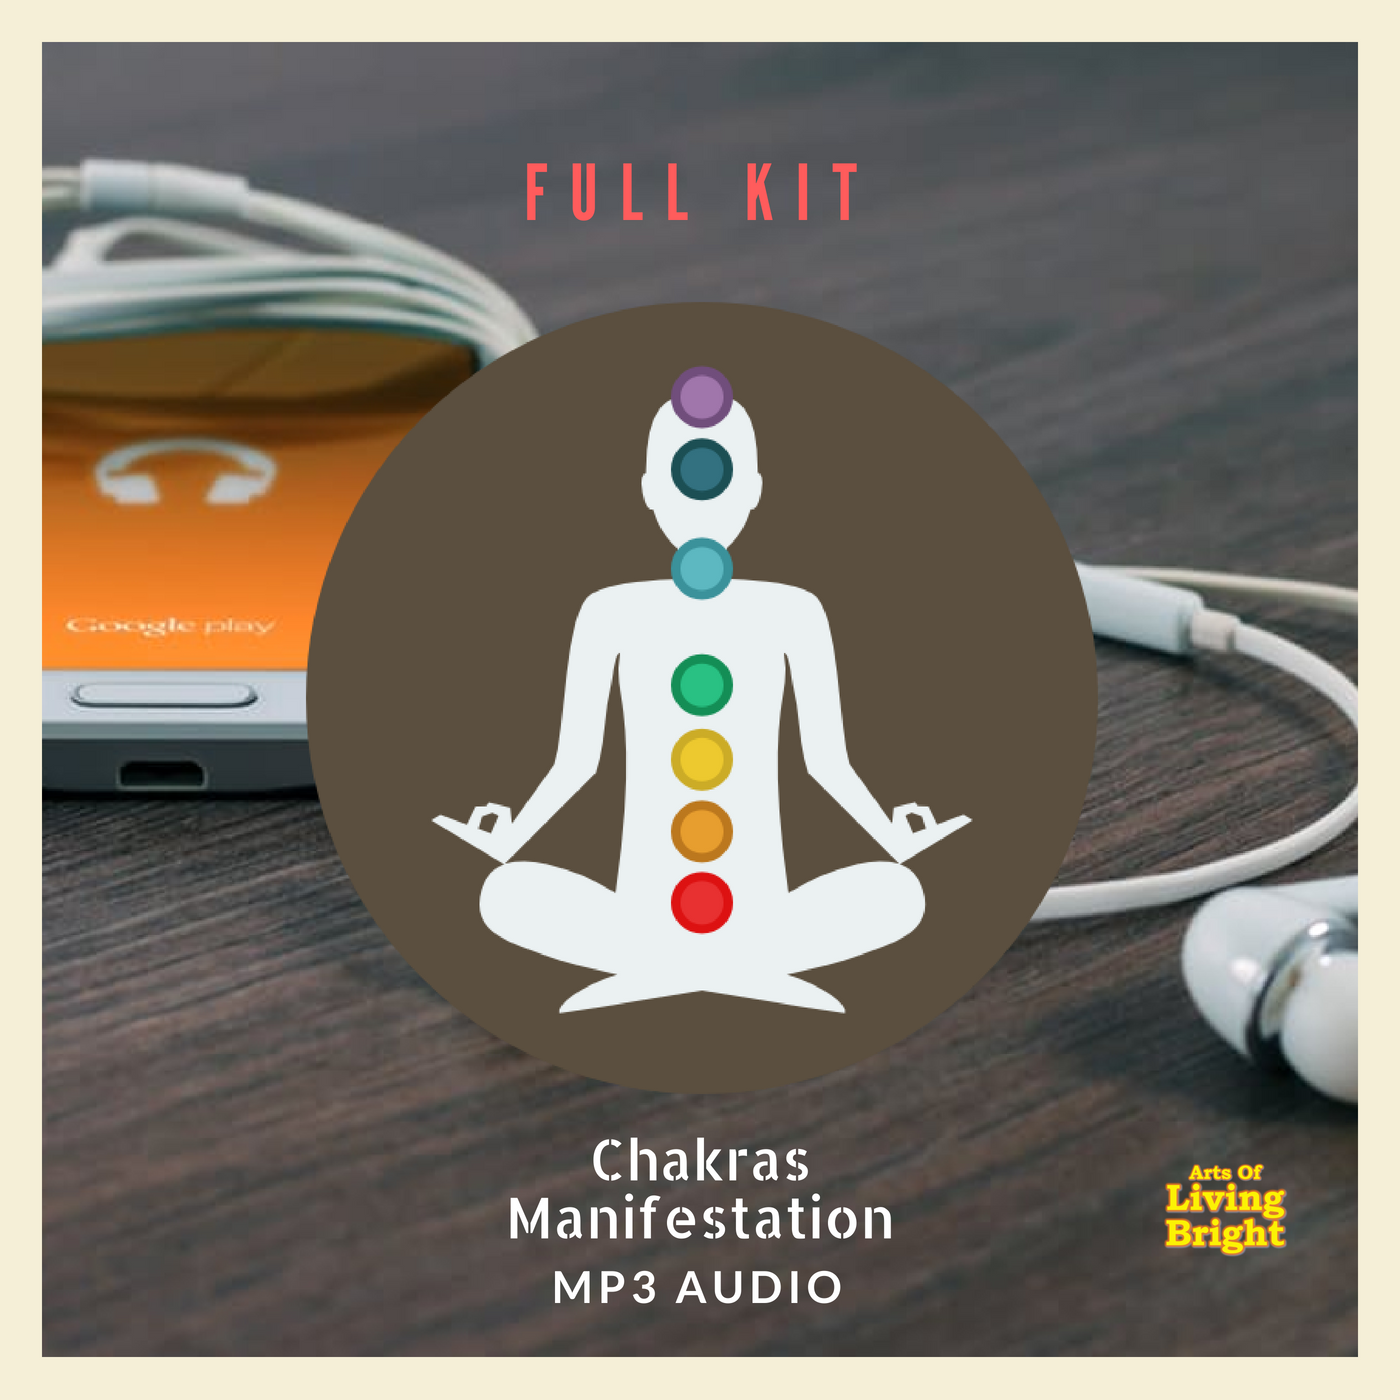 Full kit Chakras Manifestation MP3 Audio